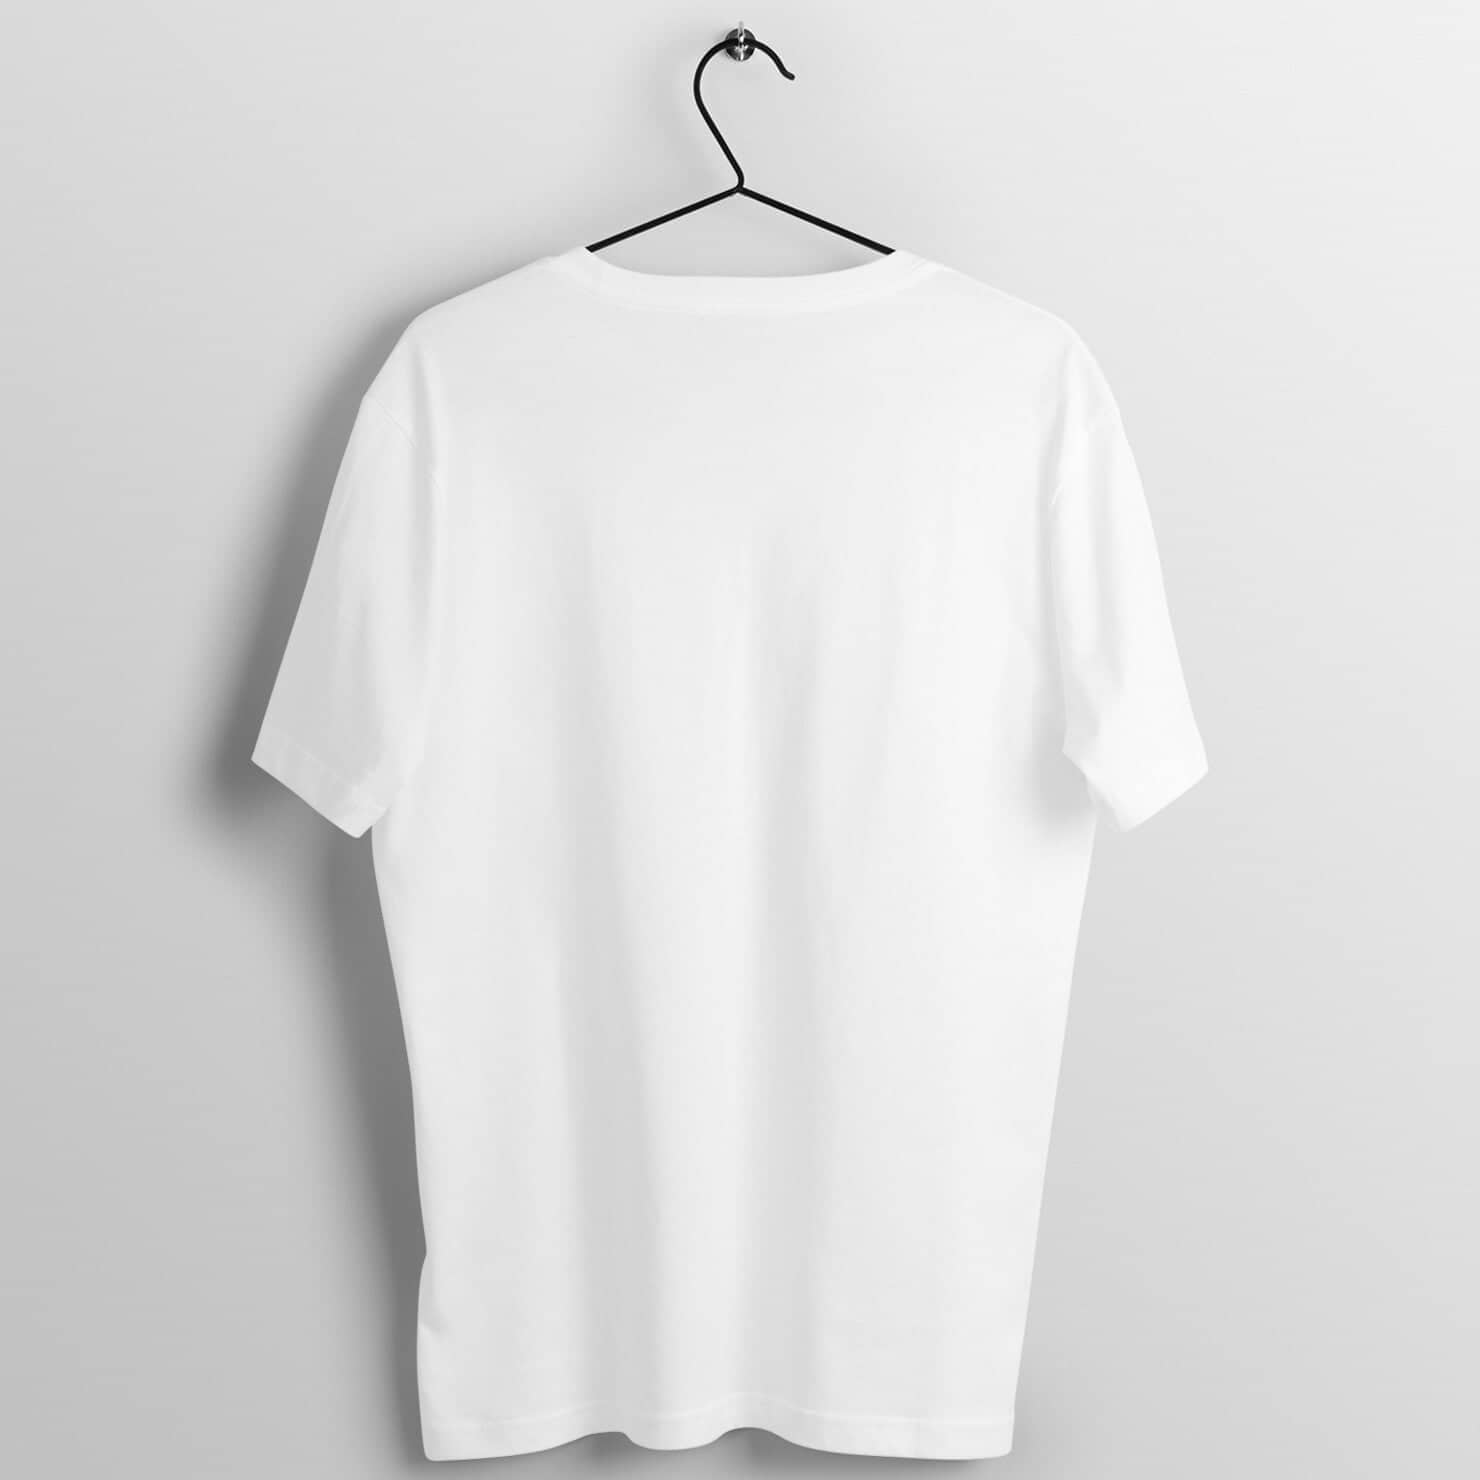 Bang Bang Bangity Bang Exclusive How I Met Your Mother White T Shirt for Men and Women Printrove 